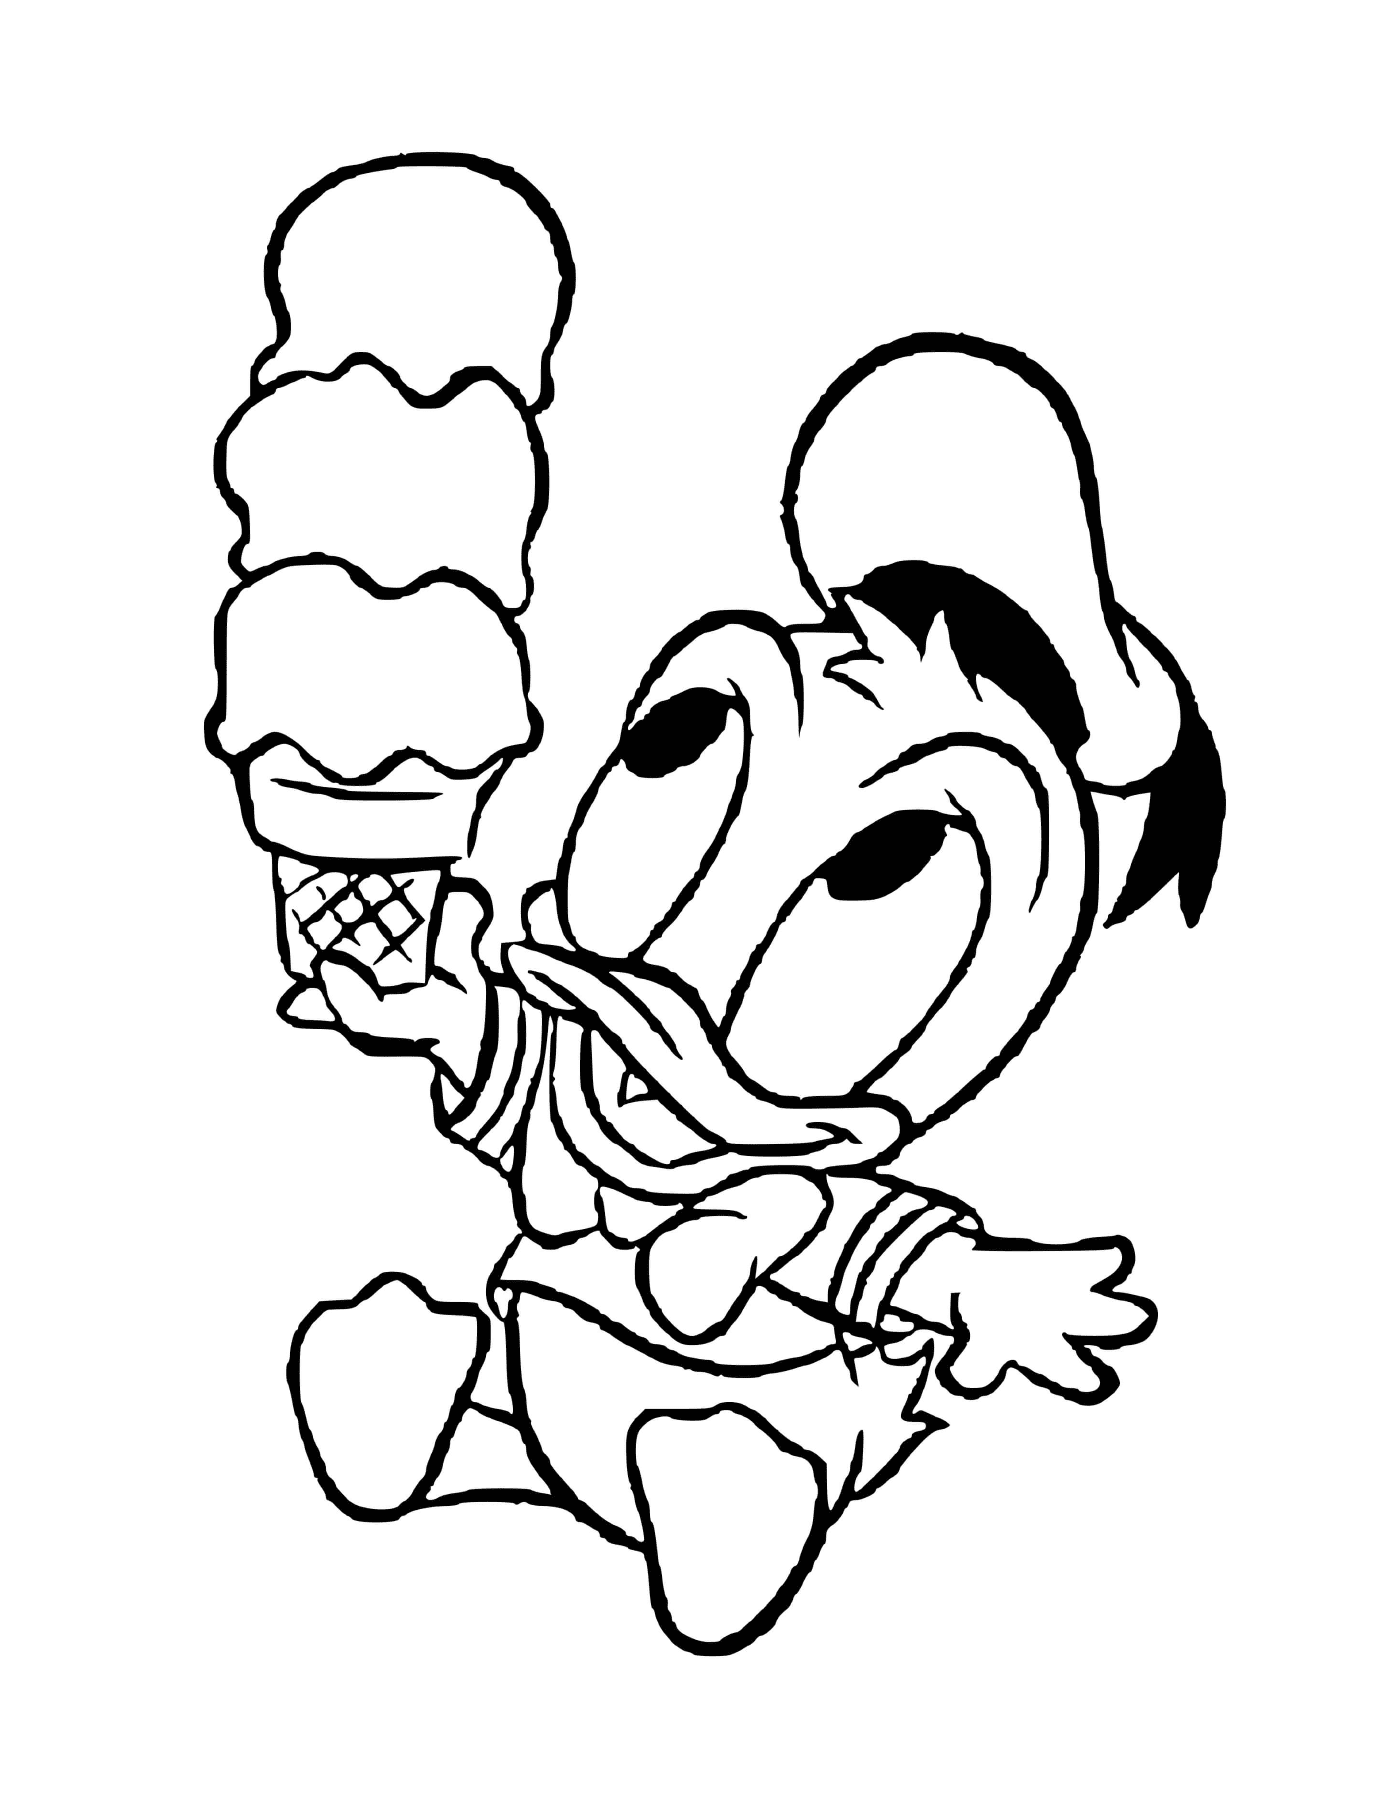  Donald Duck baby loves ice cream 